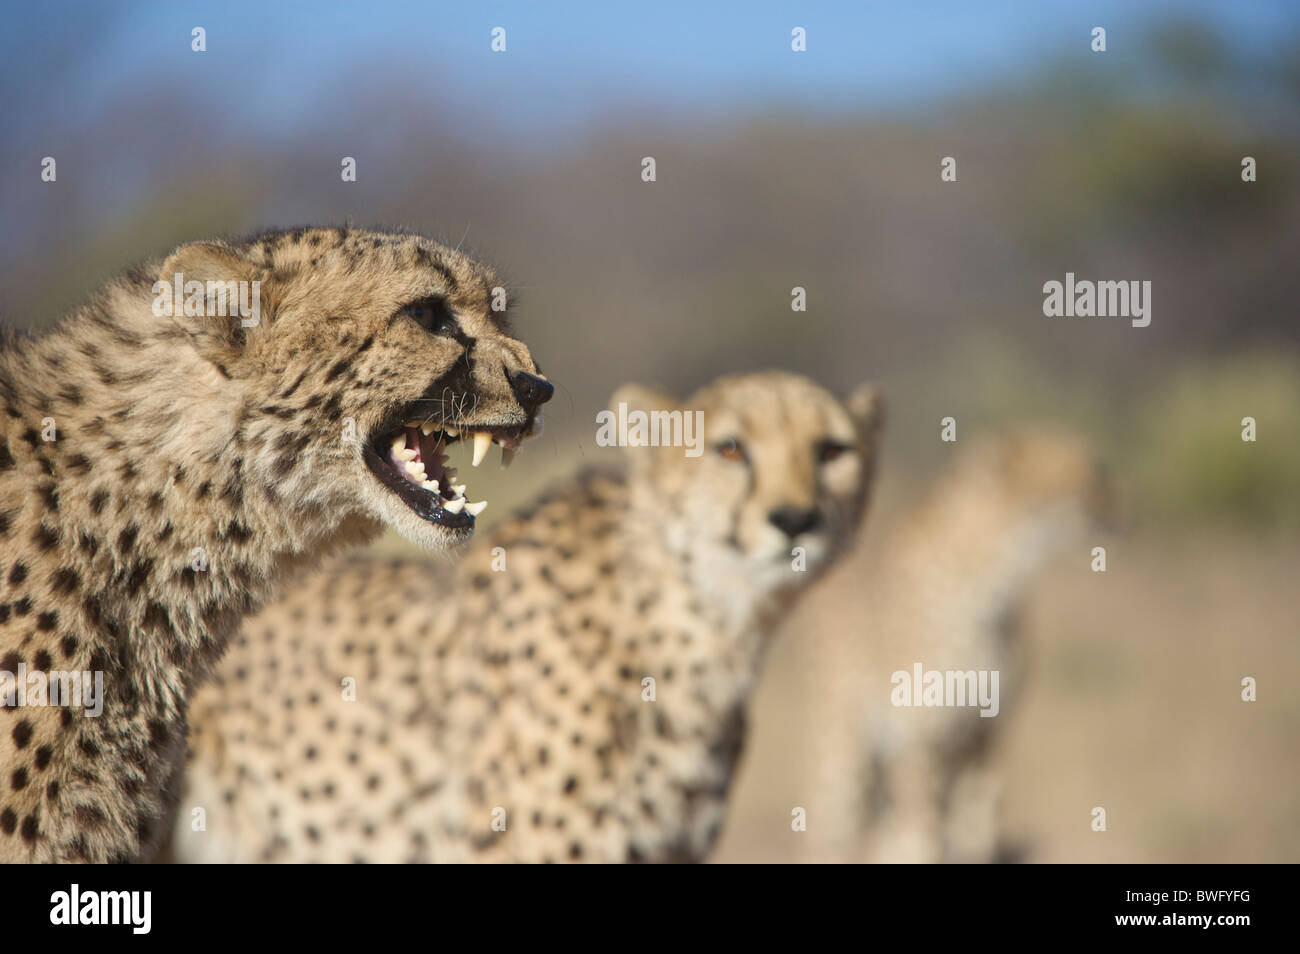 Gepard (Acinonyx Jubatus) knurrend mit anderen im Hintergrund, Namibia Stockfoto